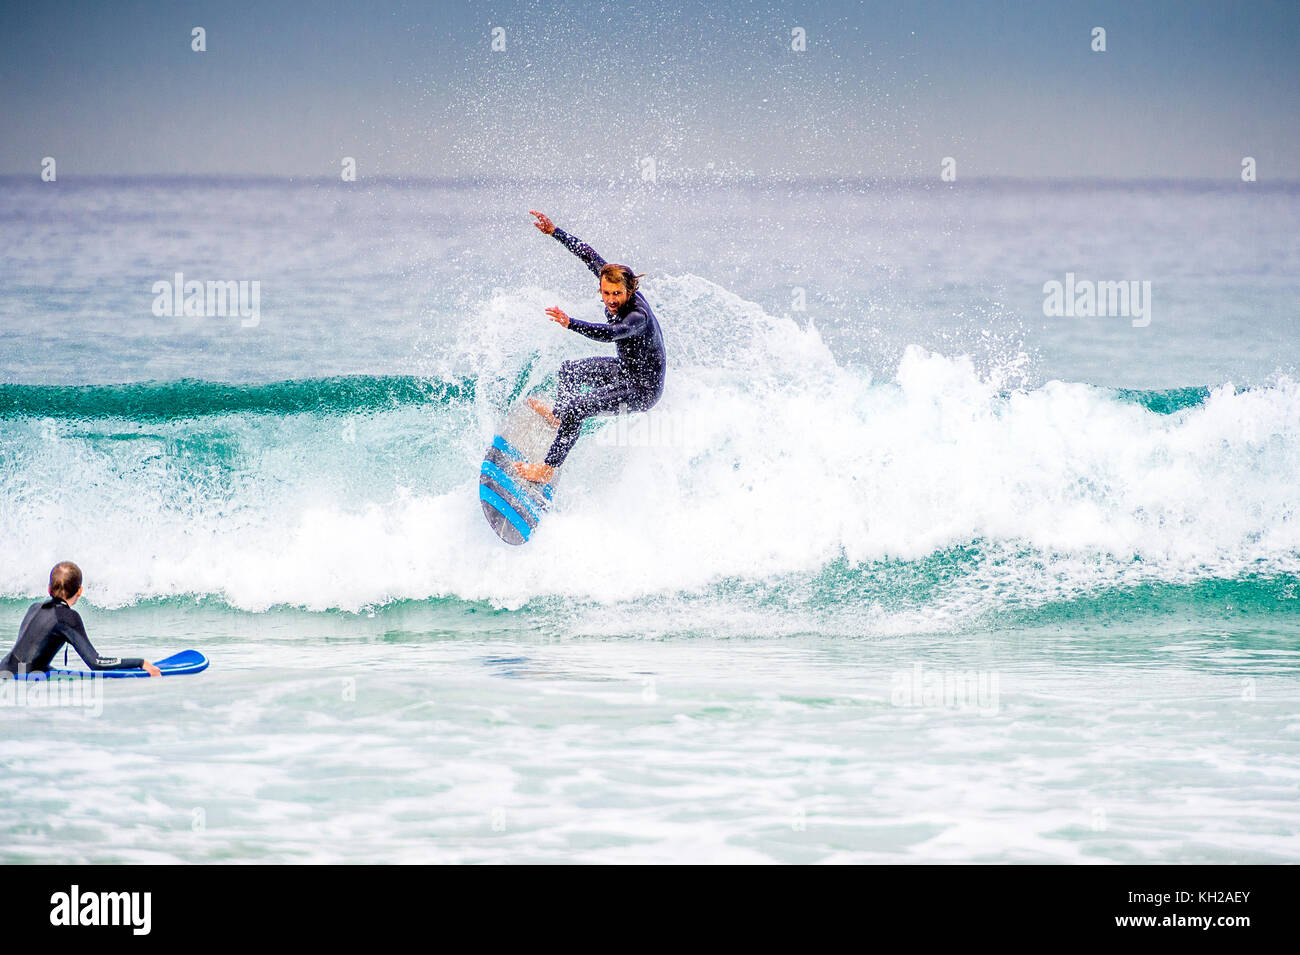 A surfer ride a wave at Sydney's iconic Bondi Beach, NSW, Australia Stock Photo